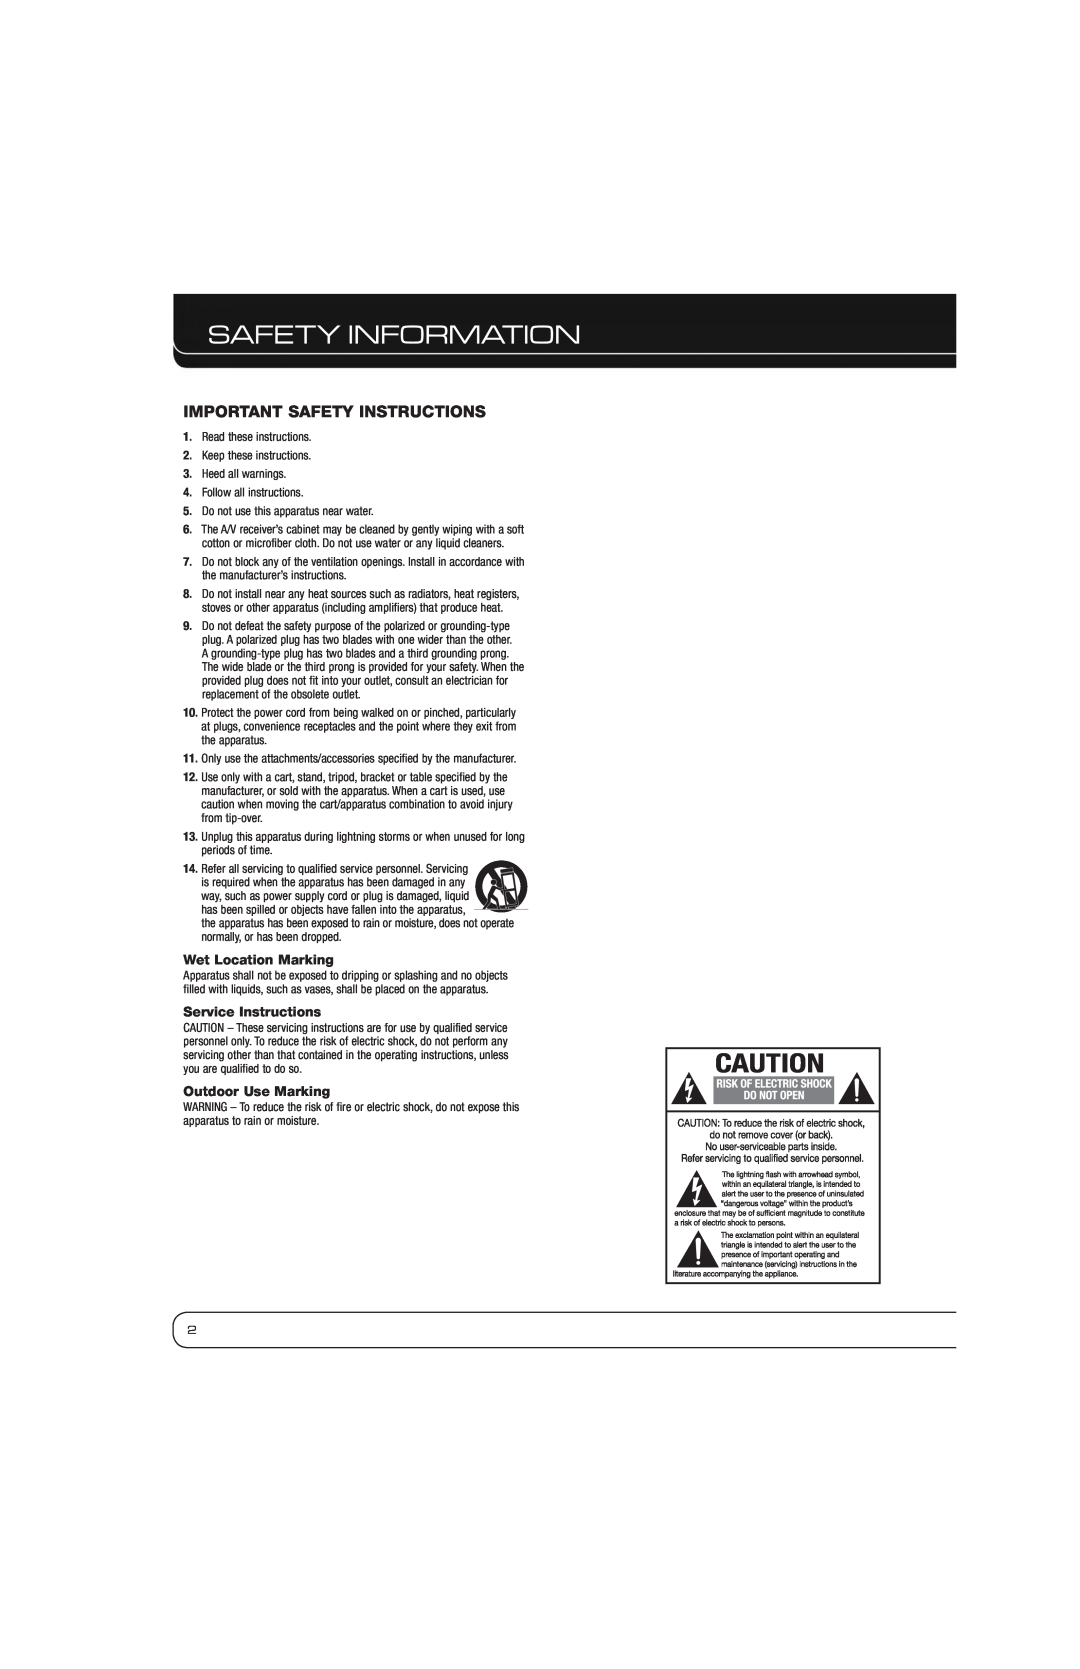 Harman-Kardon AVR 1600 Safety Information, Important Safety Instructions, Wet Location Marking, Service Instructions 